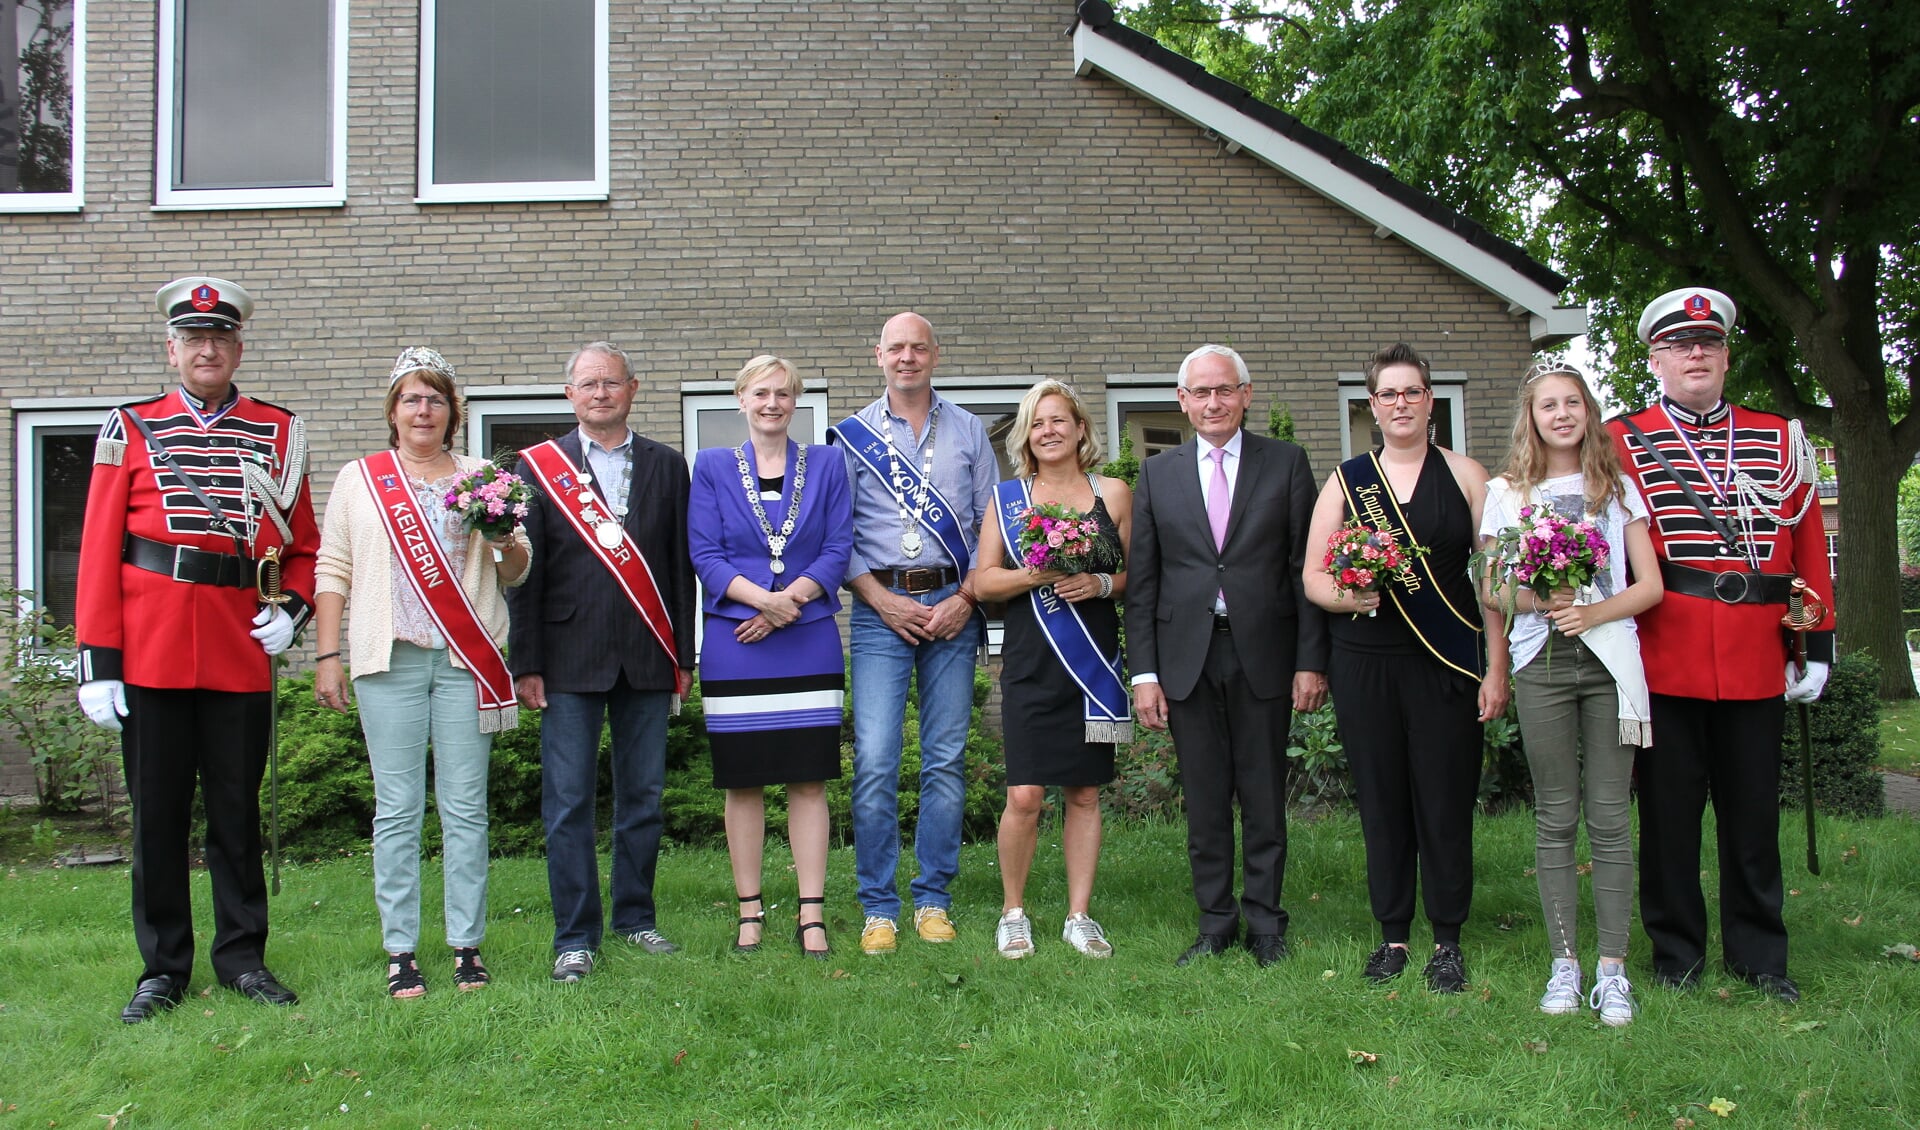 Burgemeesters Marianne Besselink (vierde van links) en Franz Möllering (vierde van rechts) temidden van de koning(inn)en 2016. Foto: Liesbeth Spaansen